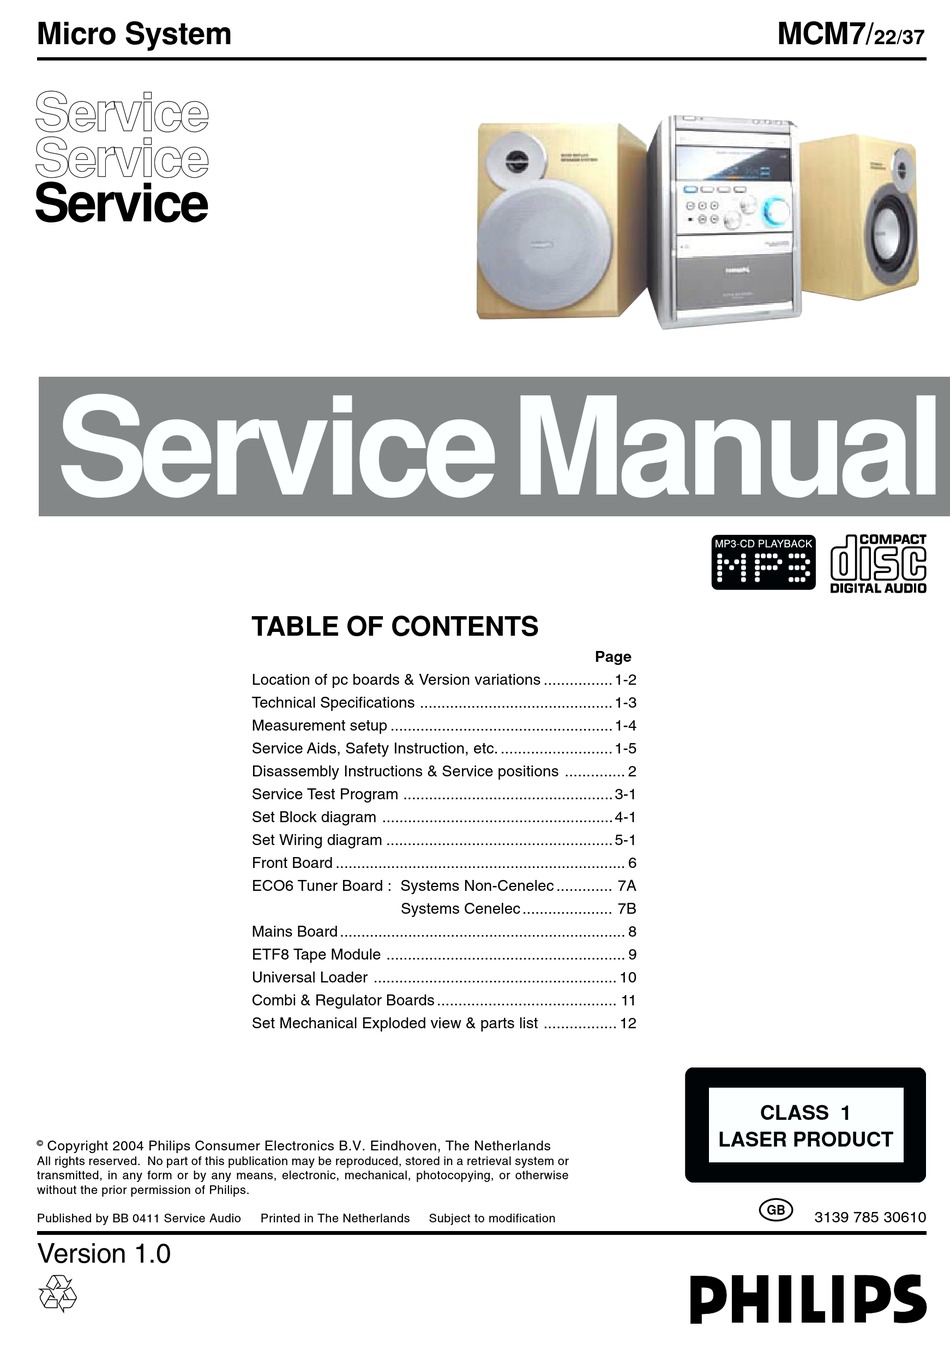 Service manual philips. Philips mcm7. Филипс mcm7/22. Service manual Philips shb9100. MC-m570/22 Micro System схема.